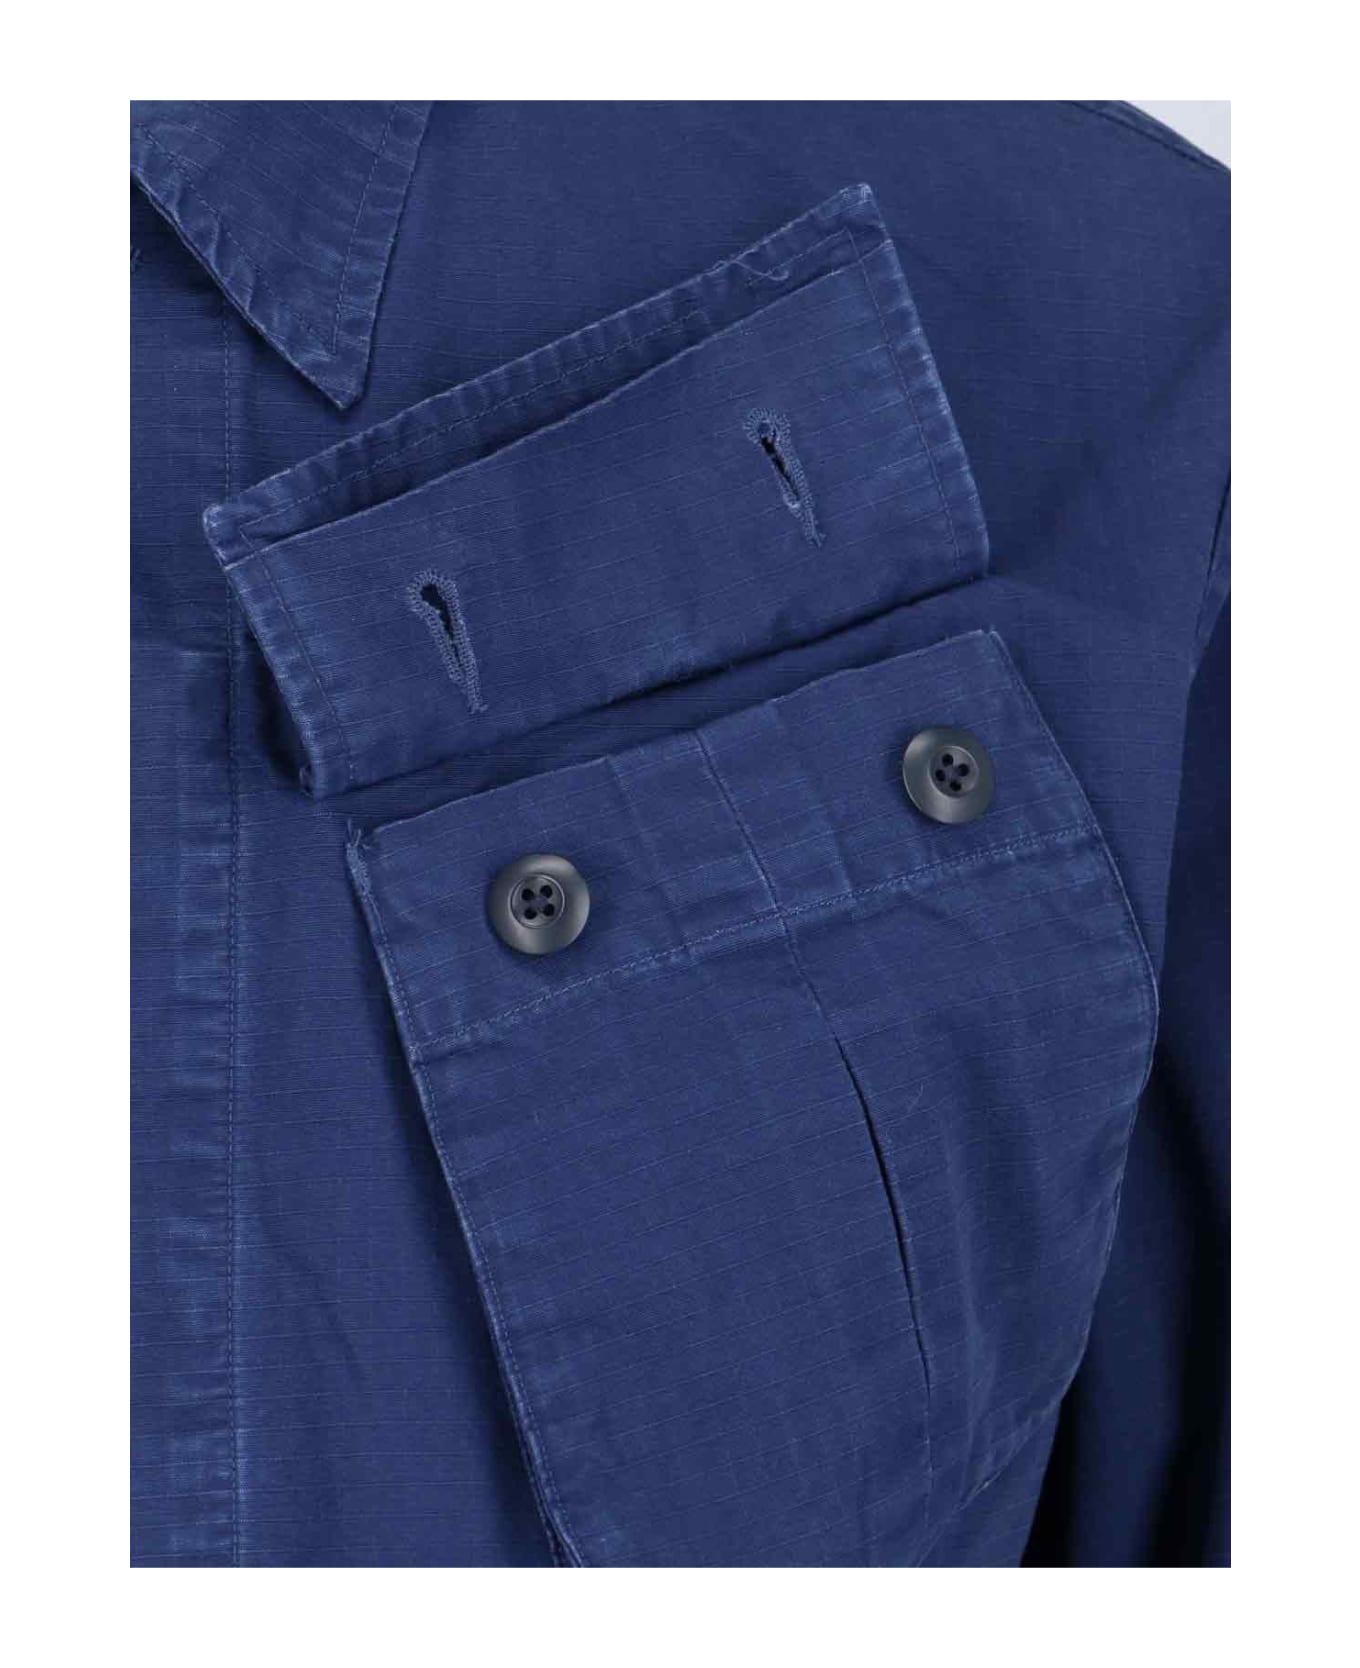 Polo Ralph Lauren Shirt Jacket - Newport Navy シャツ